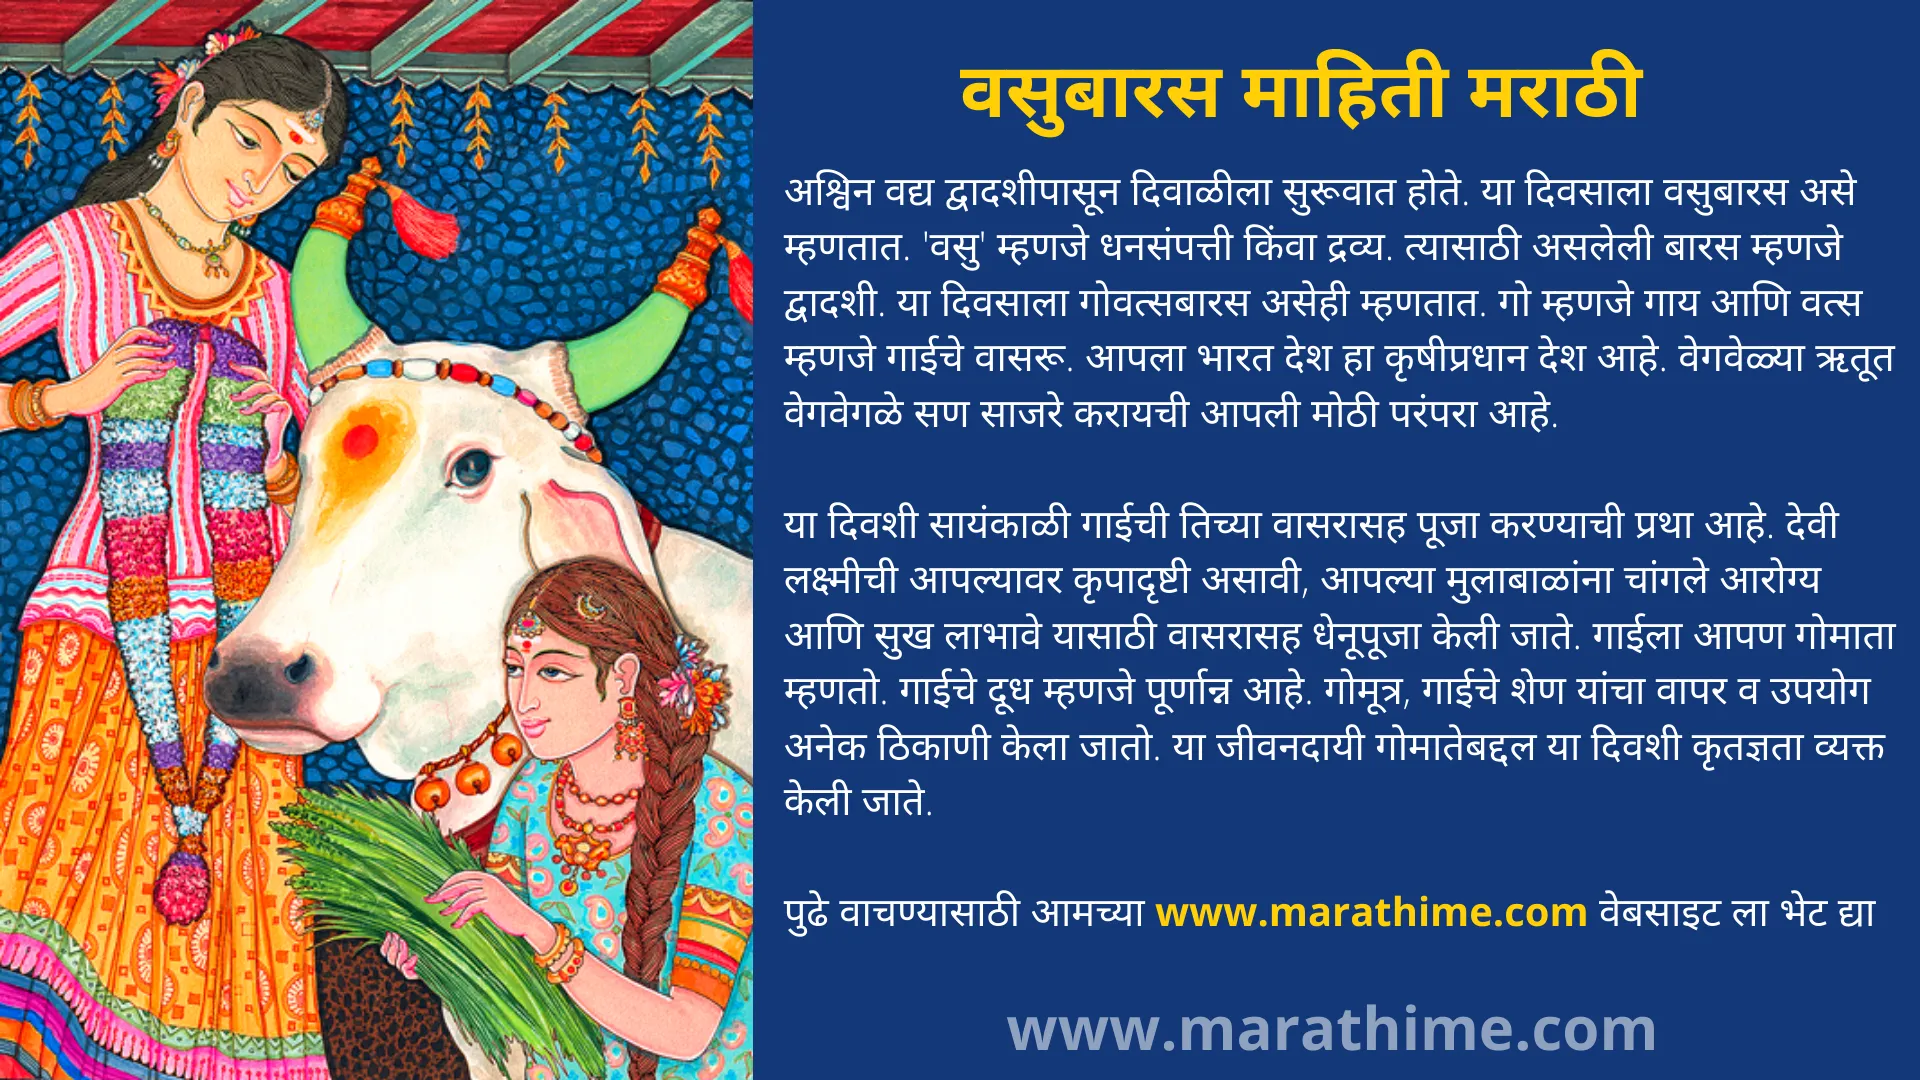 वसुबारस माहिती मराठी-Vasubaras Information in Marathi